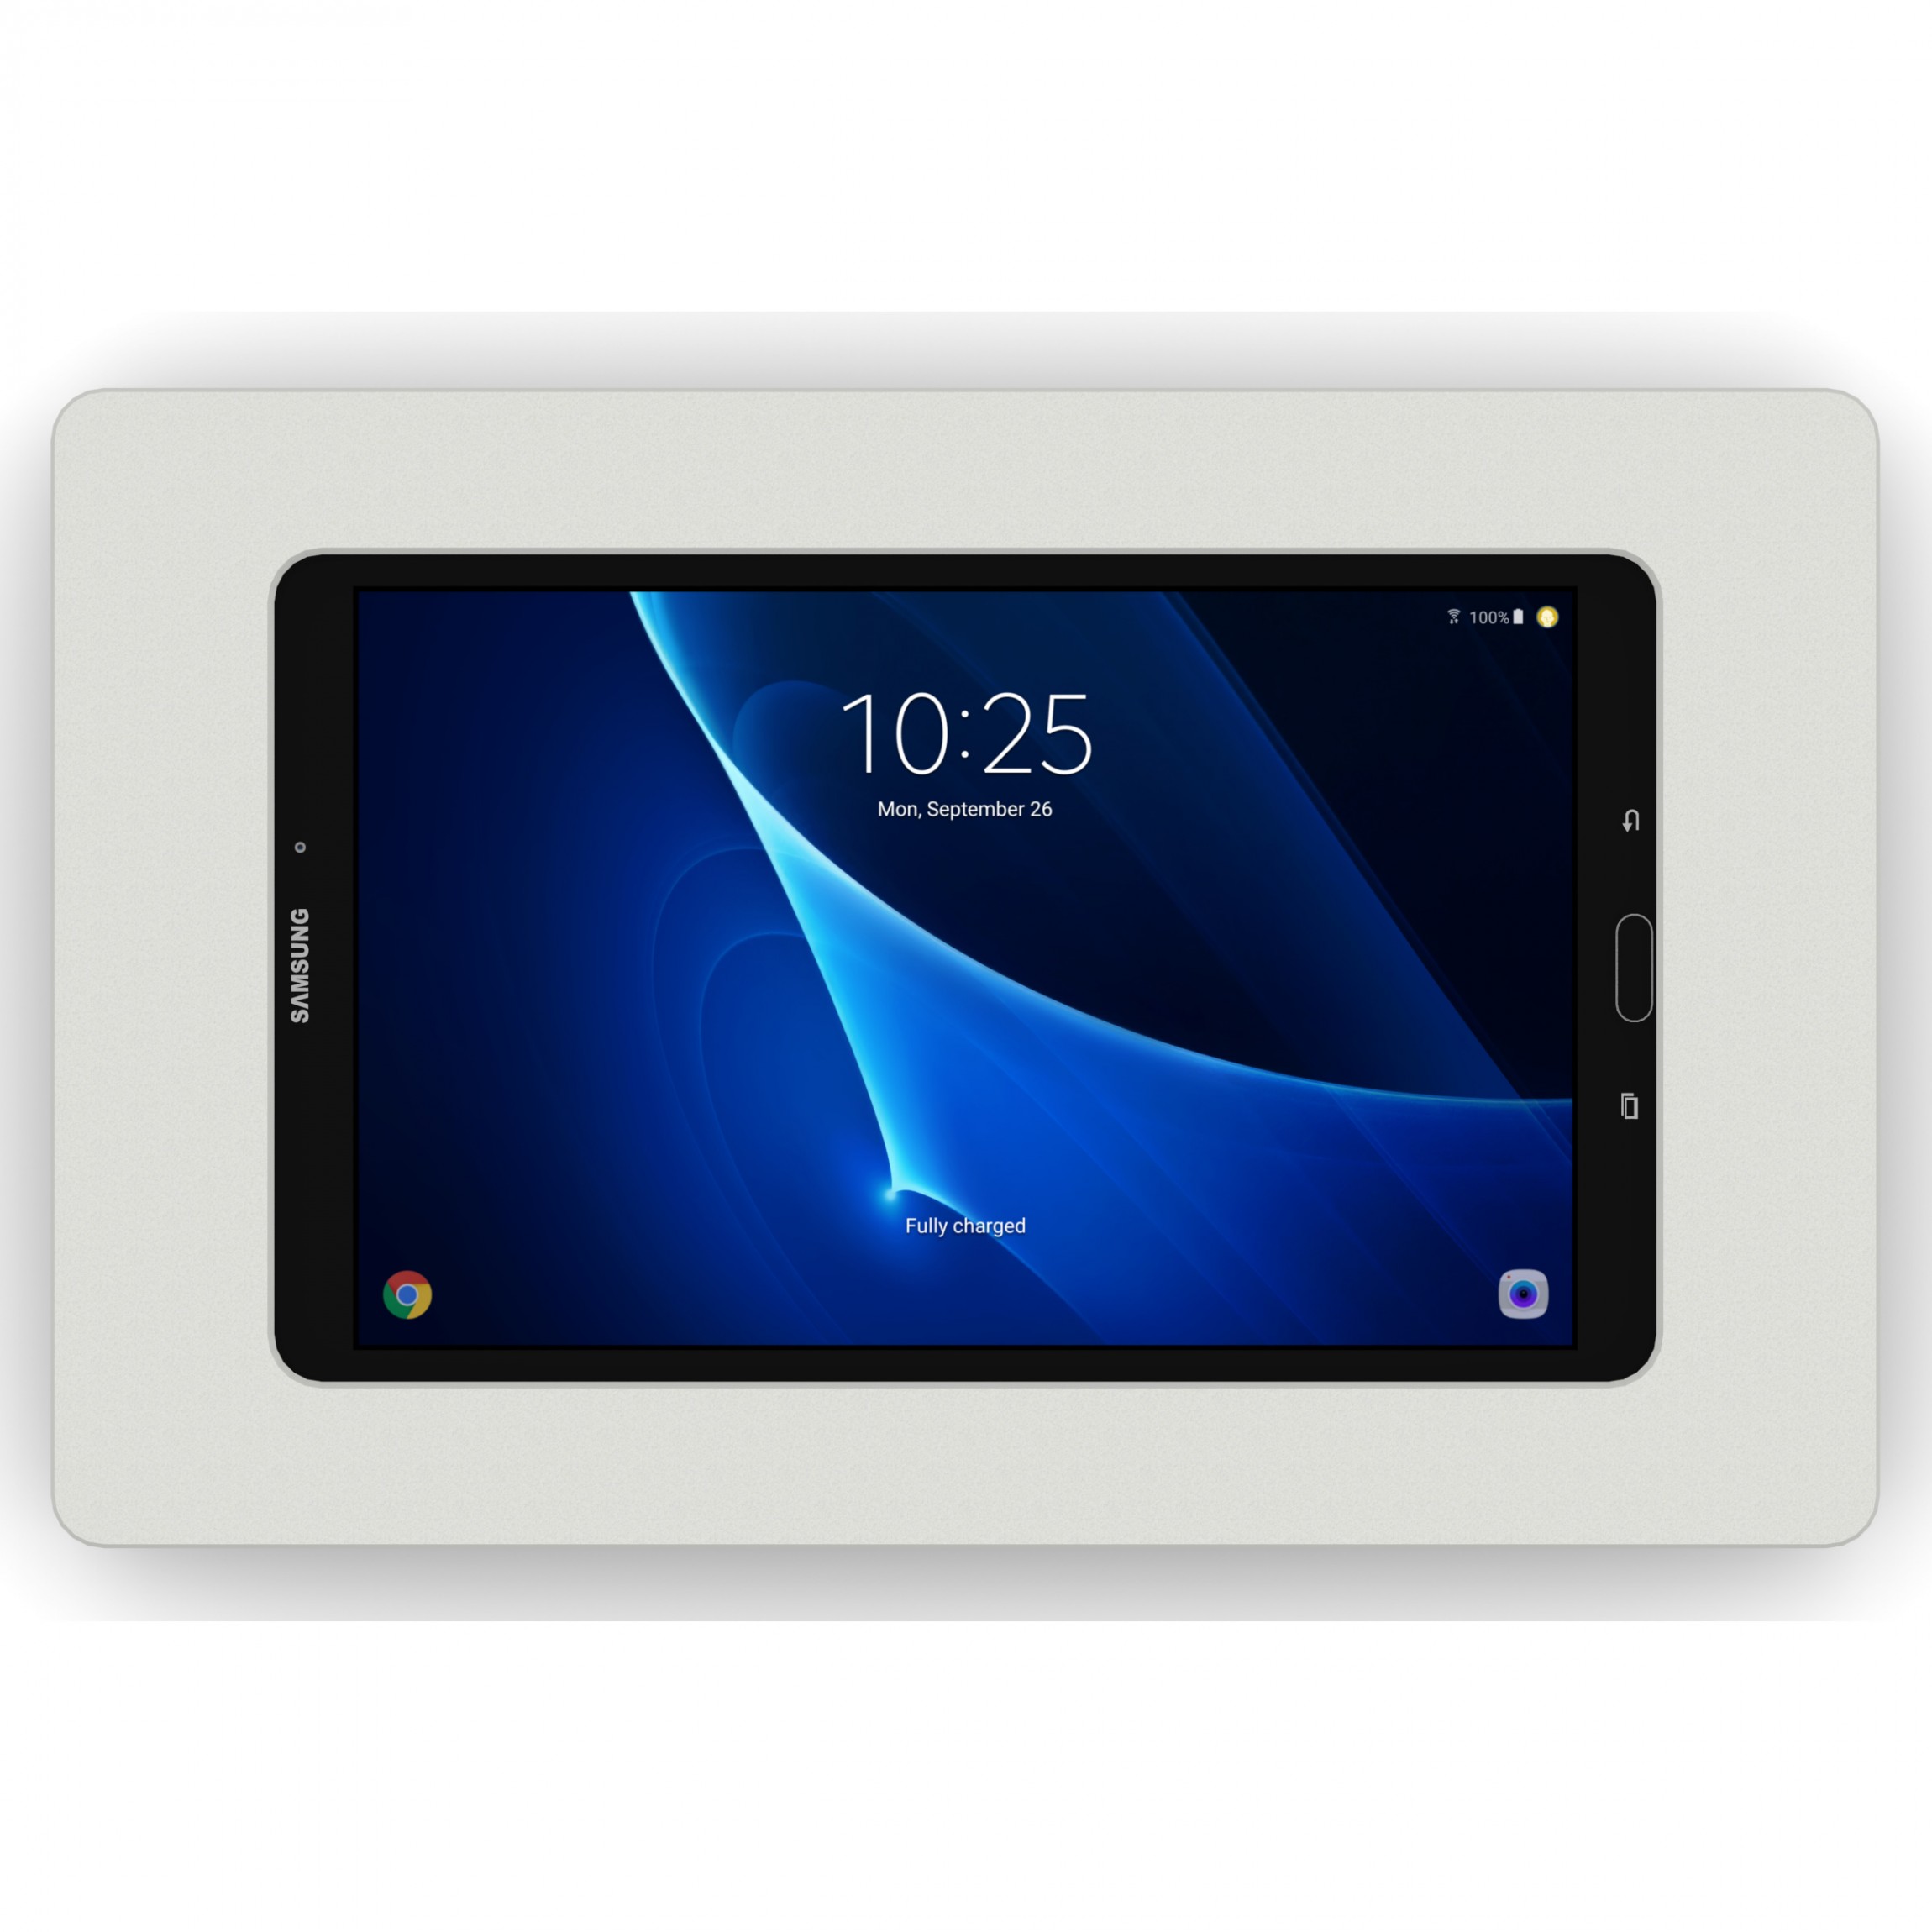 VidaMount Fixed Slim Wall Samsung Galaxy Tab A 10.1 Mount - Light Grey